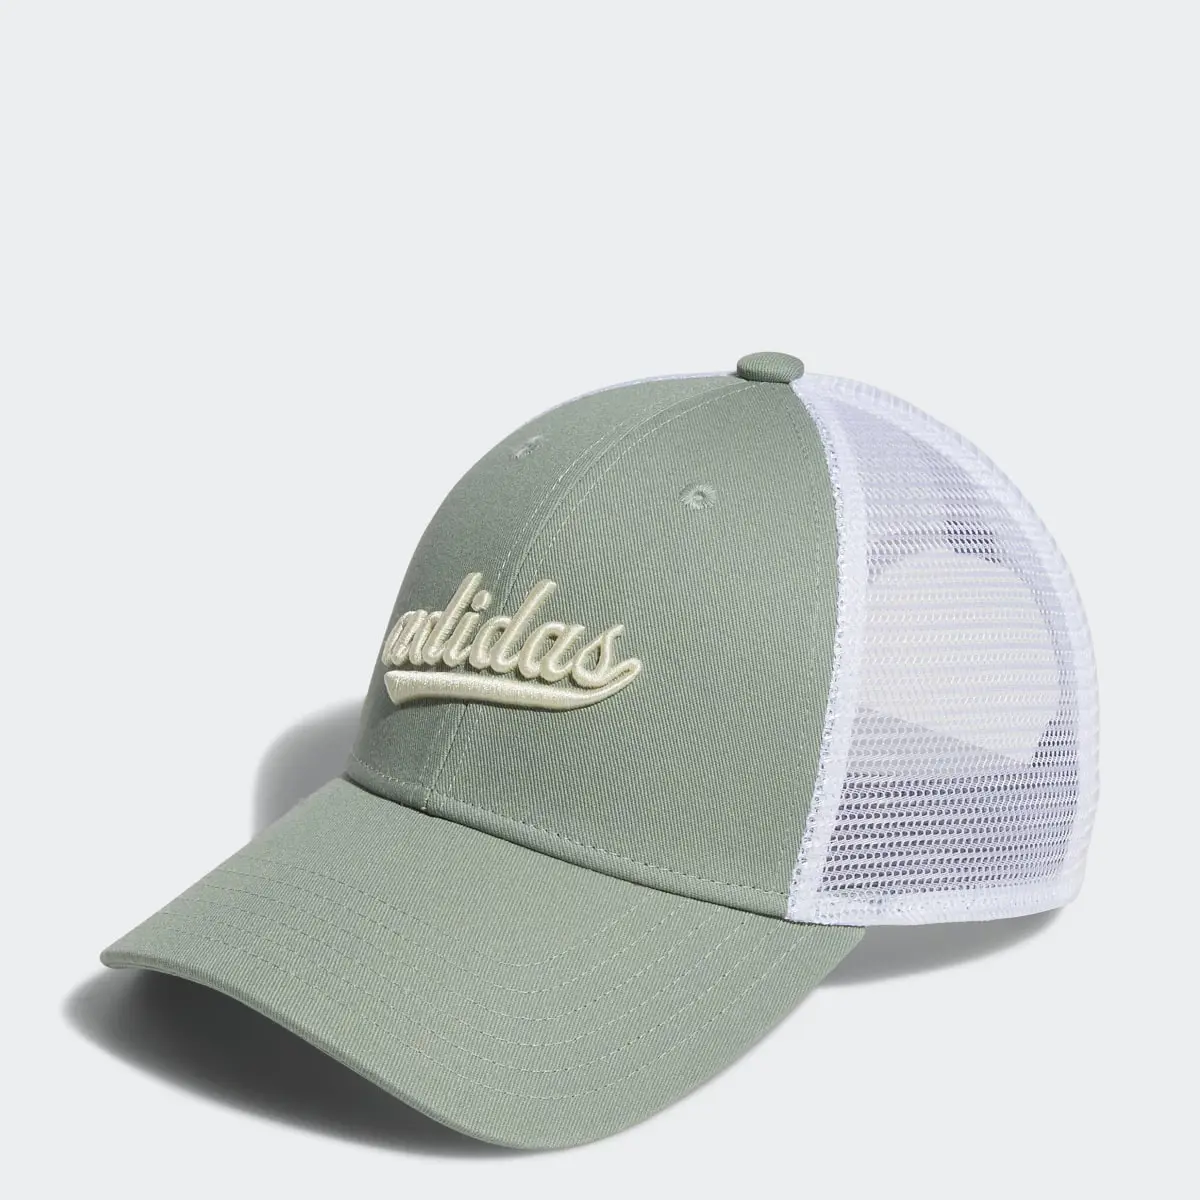 Adidas Mesh Trucker Hat. 1